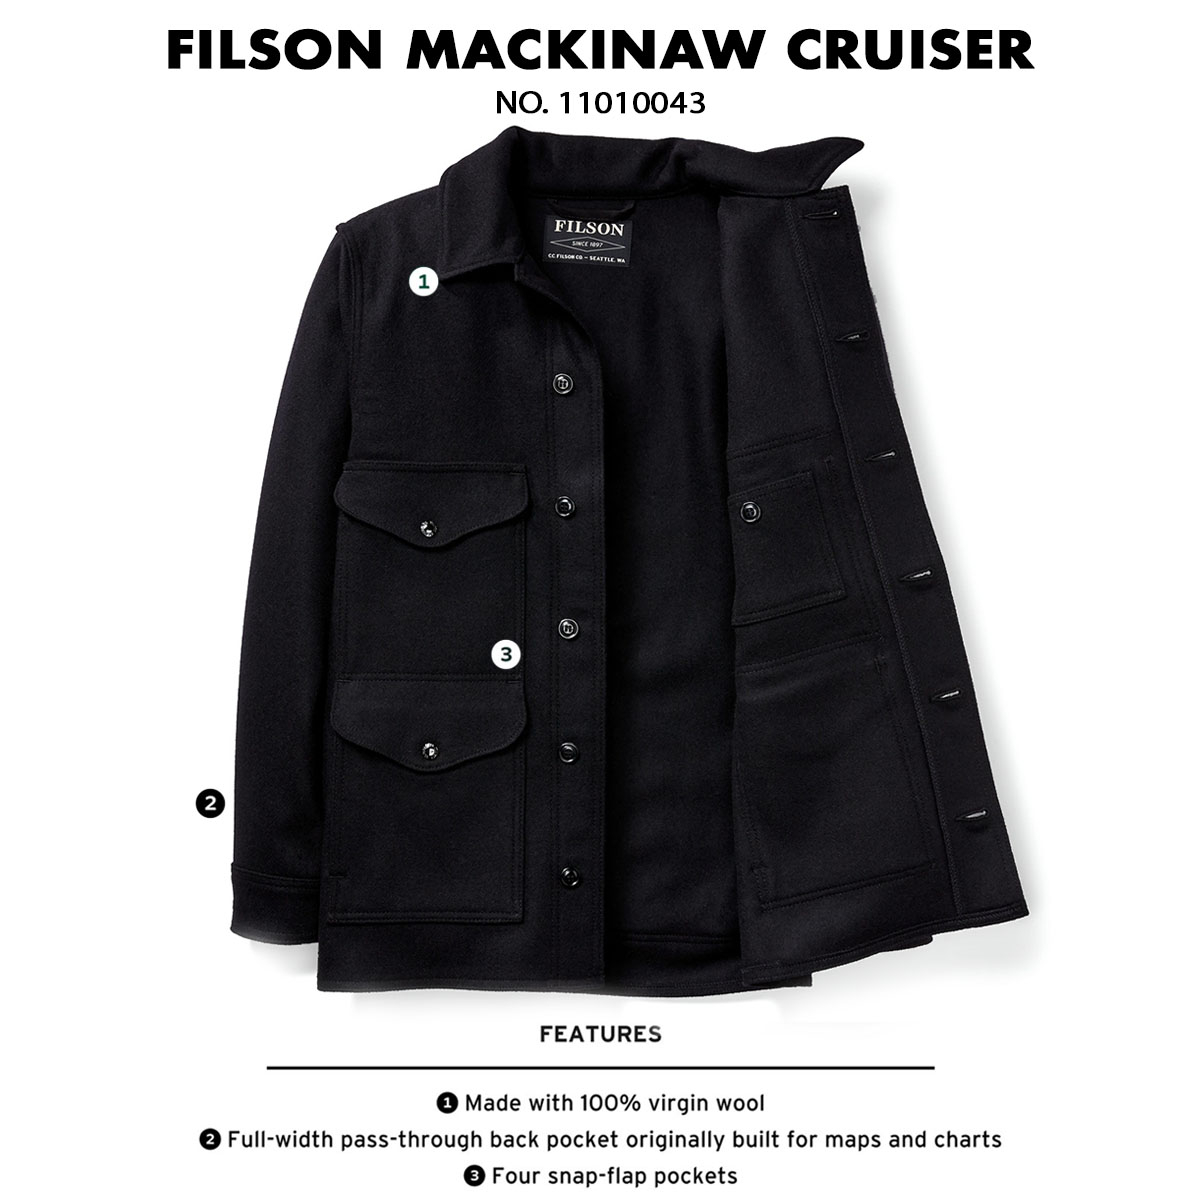 Filson Mackinaw Wool Cruiser Dark Navy 11010043, features